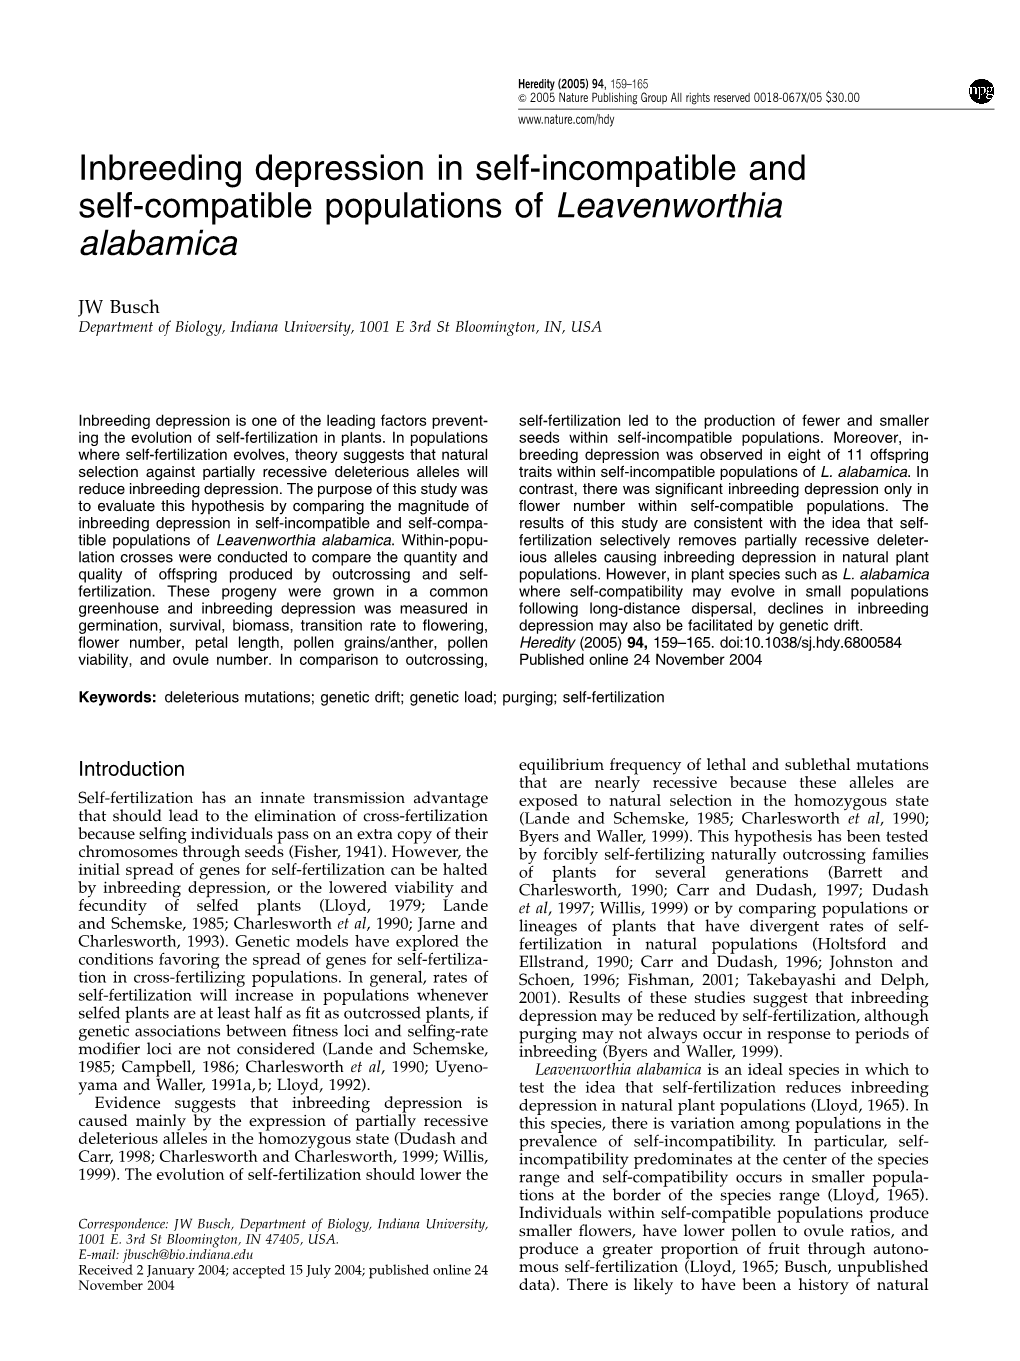 Inbreeding Depression in Self-Incompatible and Self-Compatible Populations of Leavenworthia Alabamica